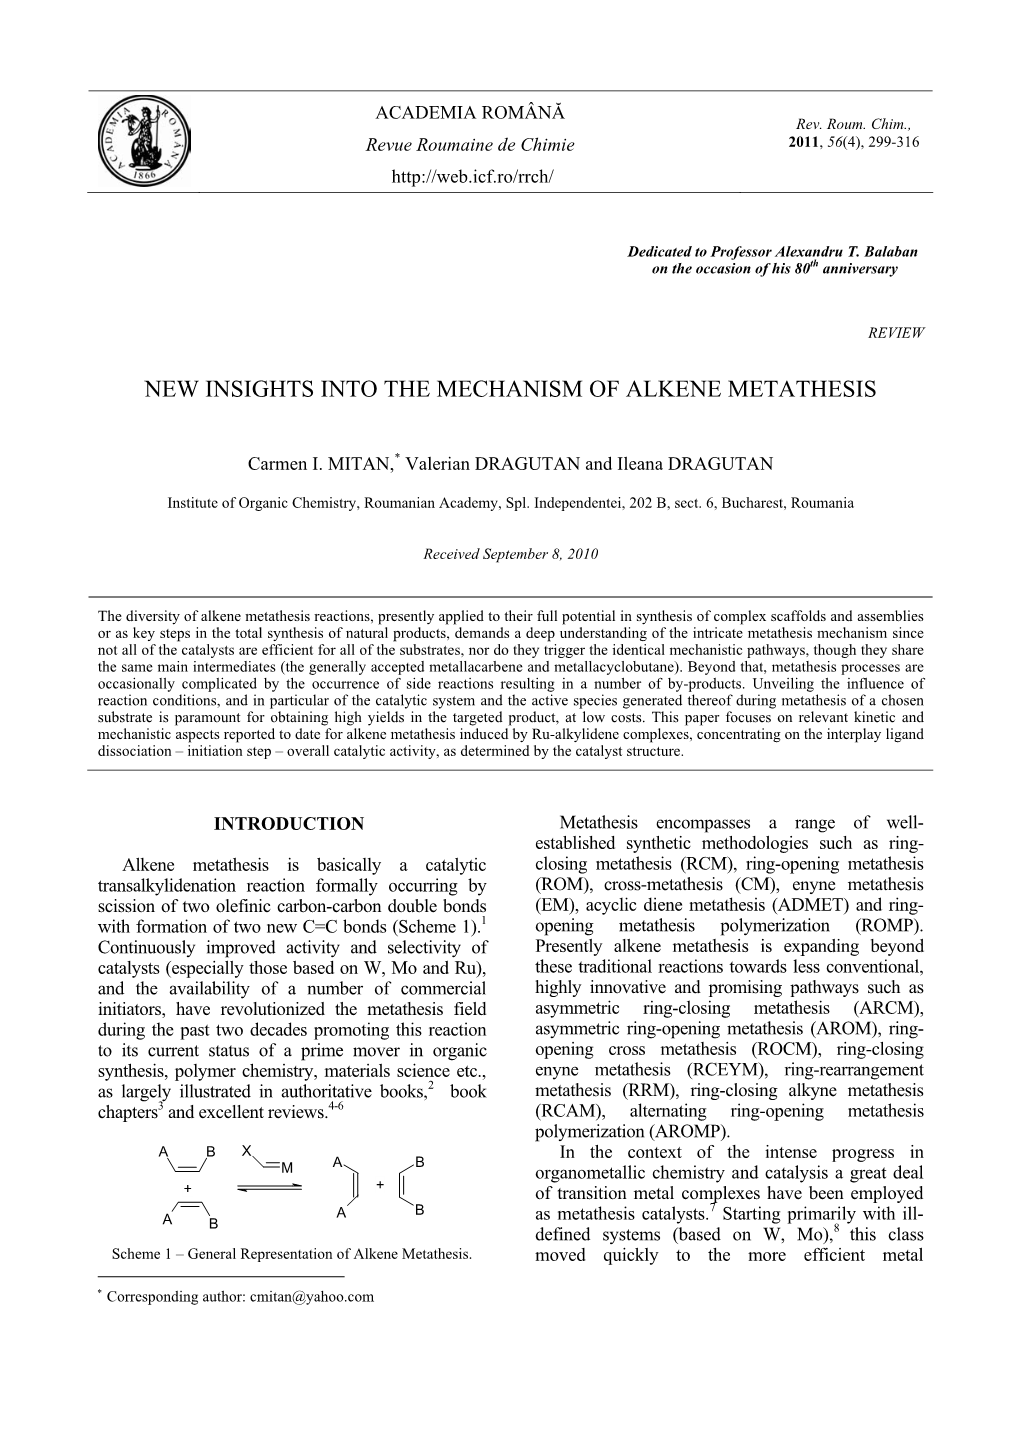 New Insights Into the Mechanism of Alkene Metathesis